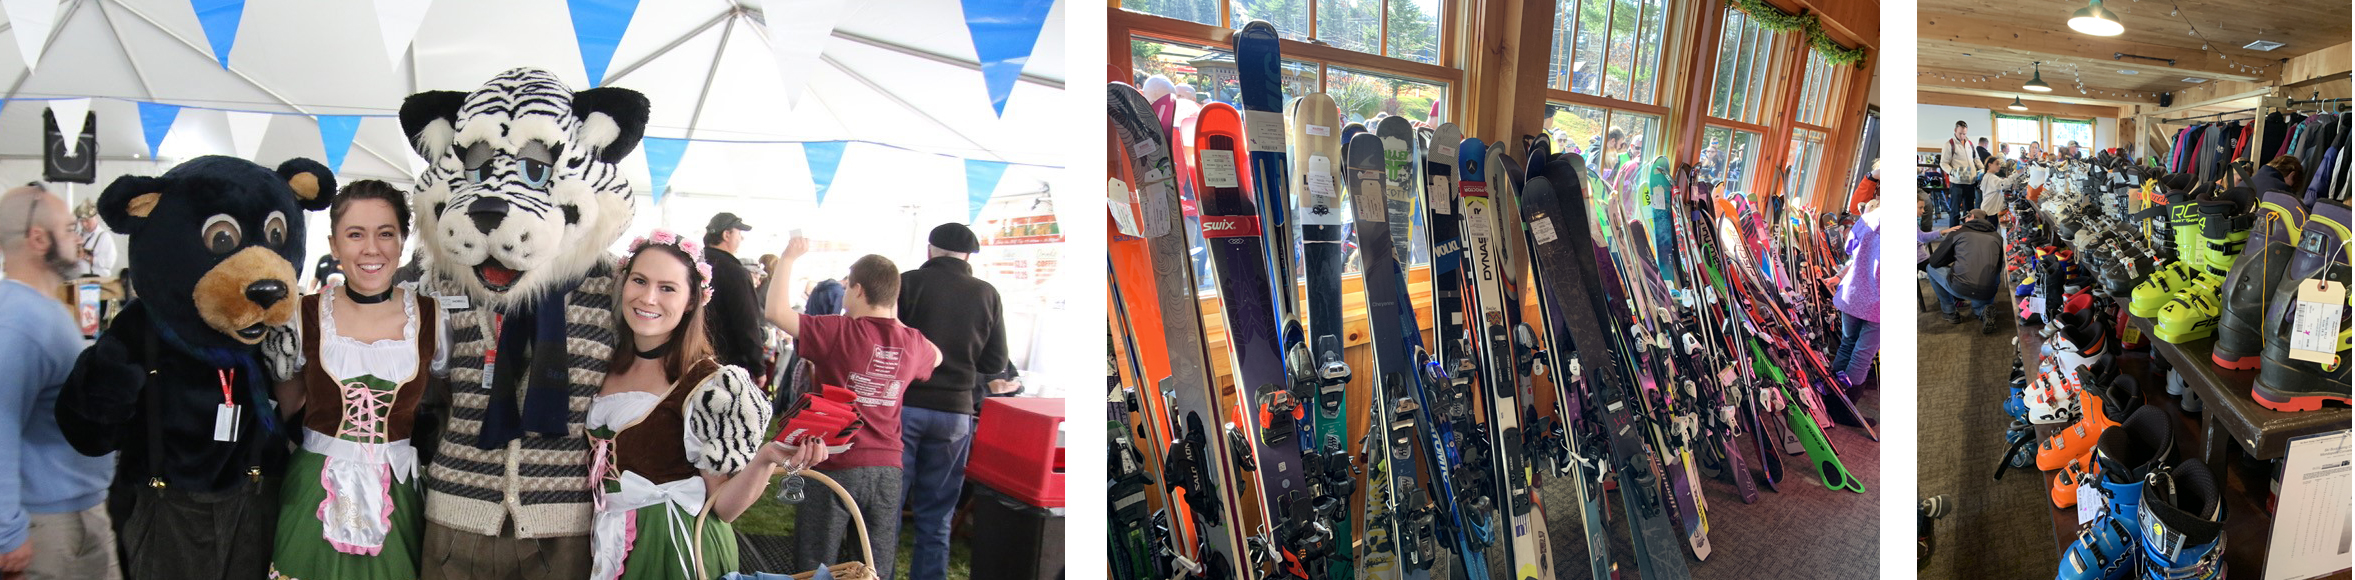 Oktoberfest and Ski & Snowboard Sale